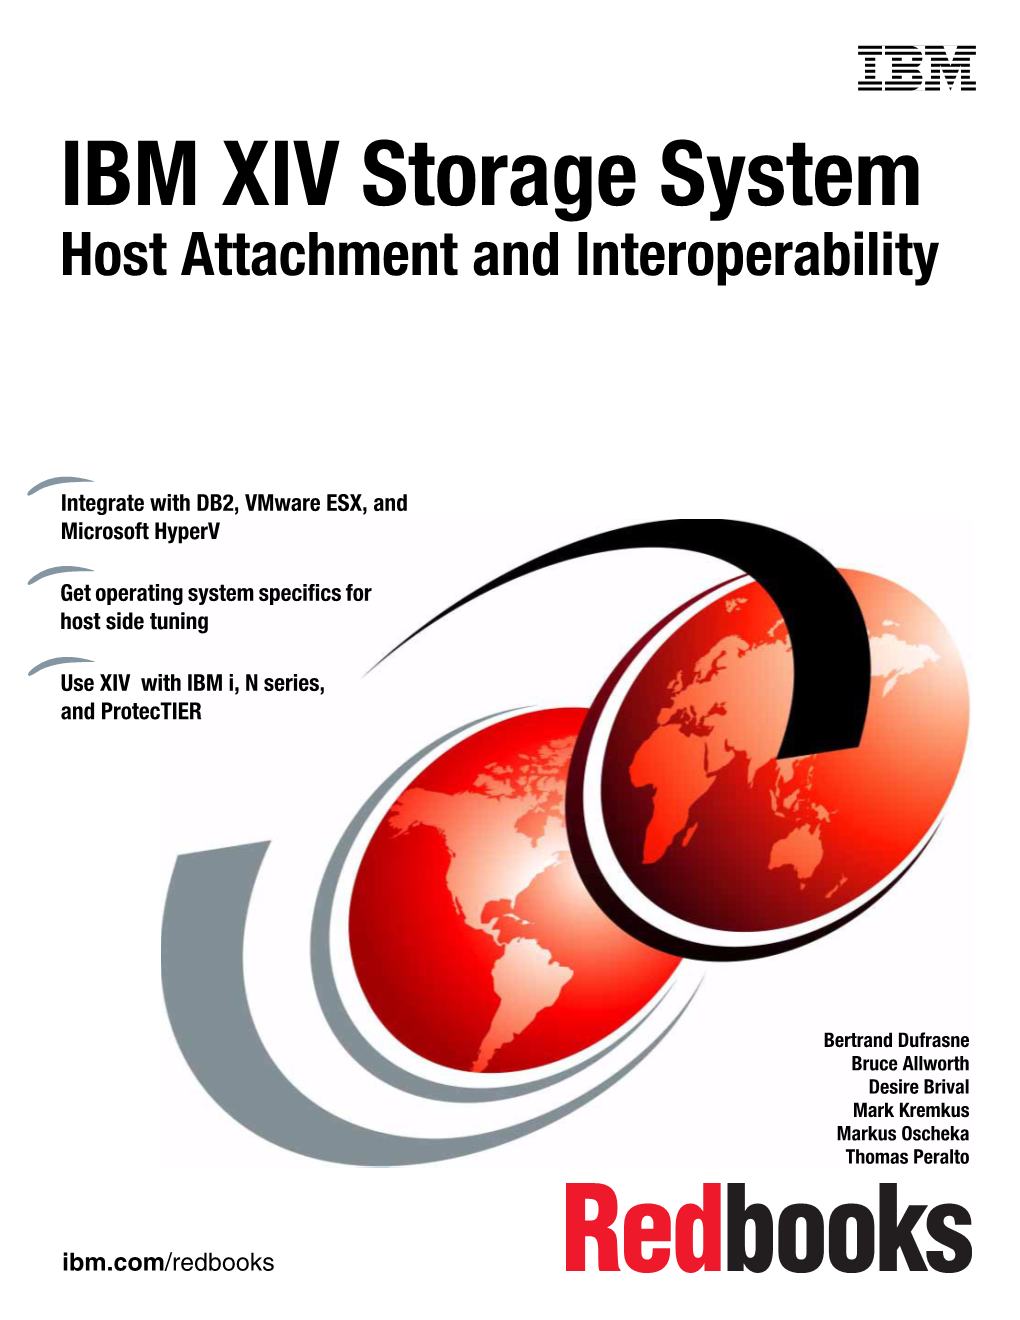 IBM XIV Storage System Host Attachment and Interoperability